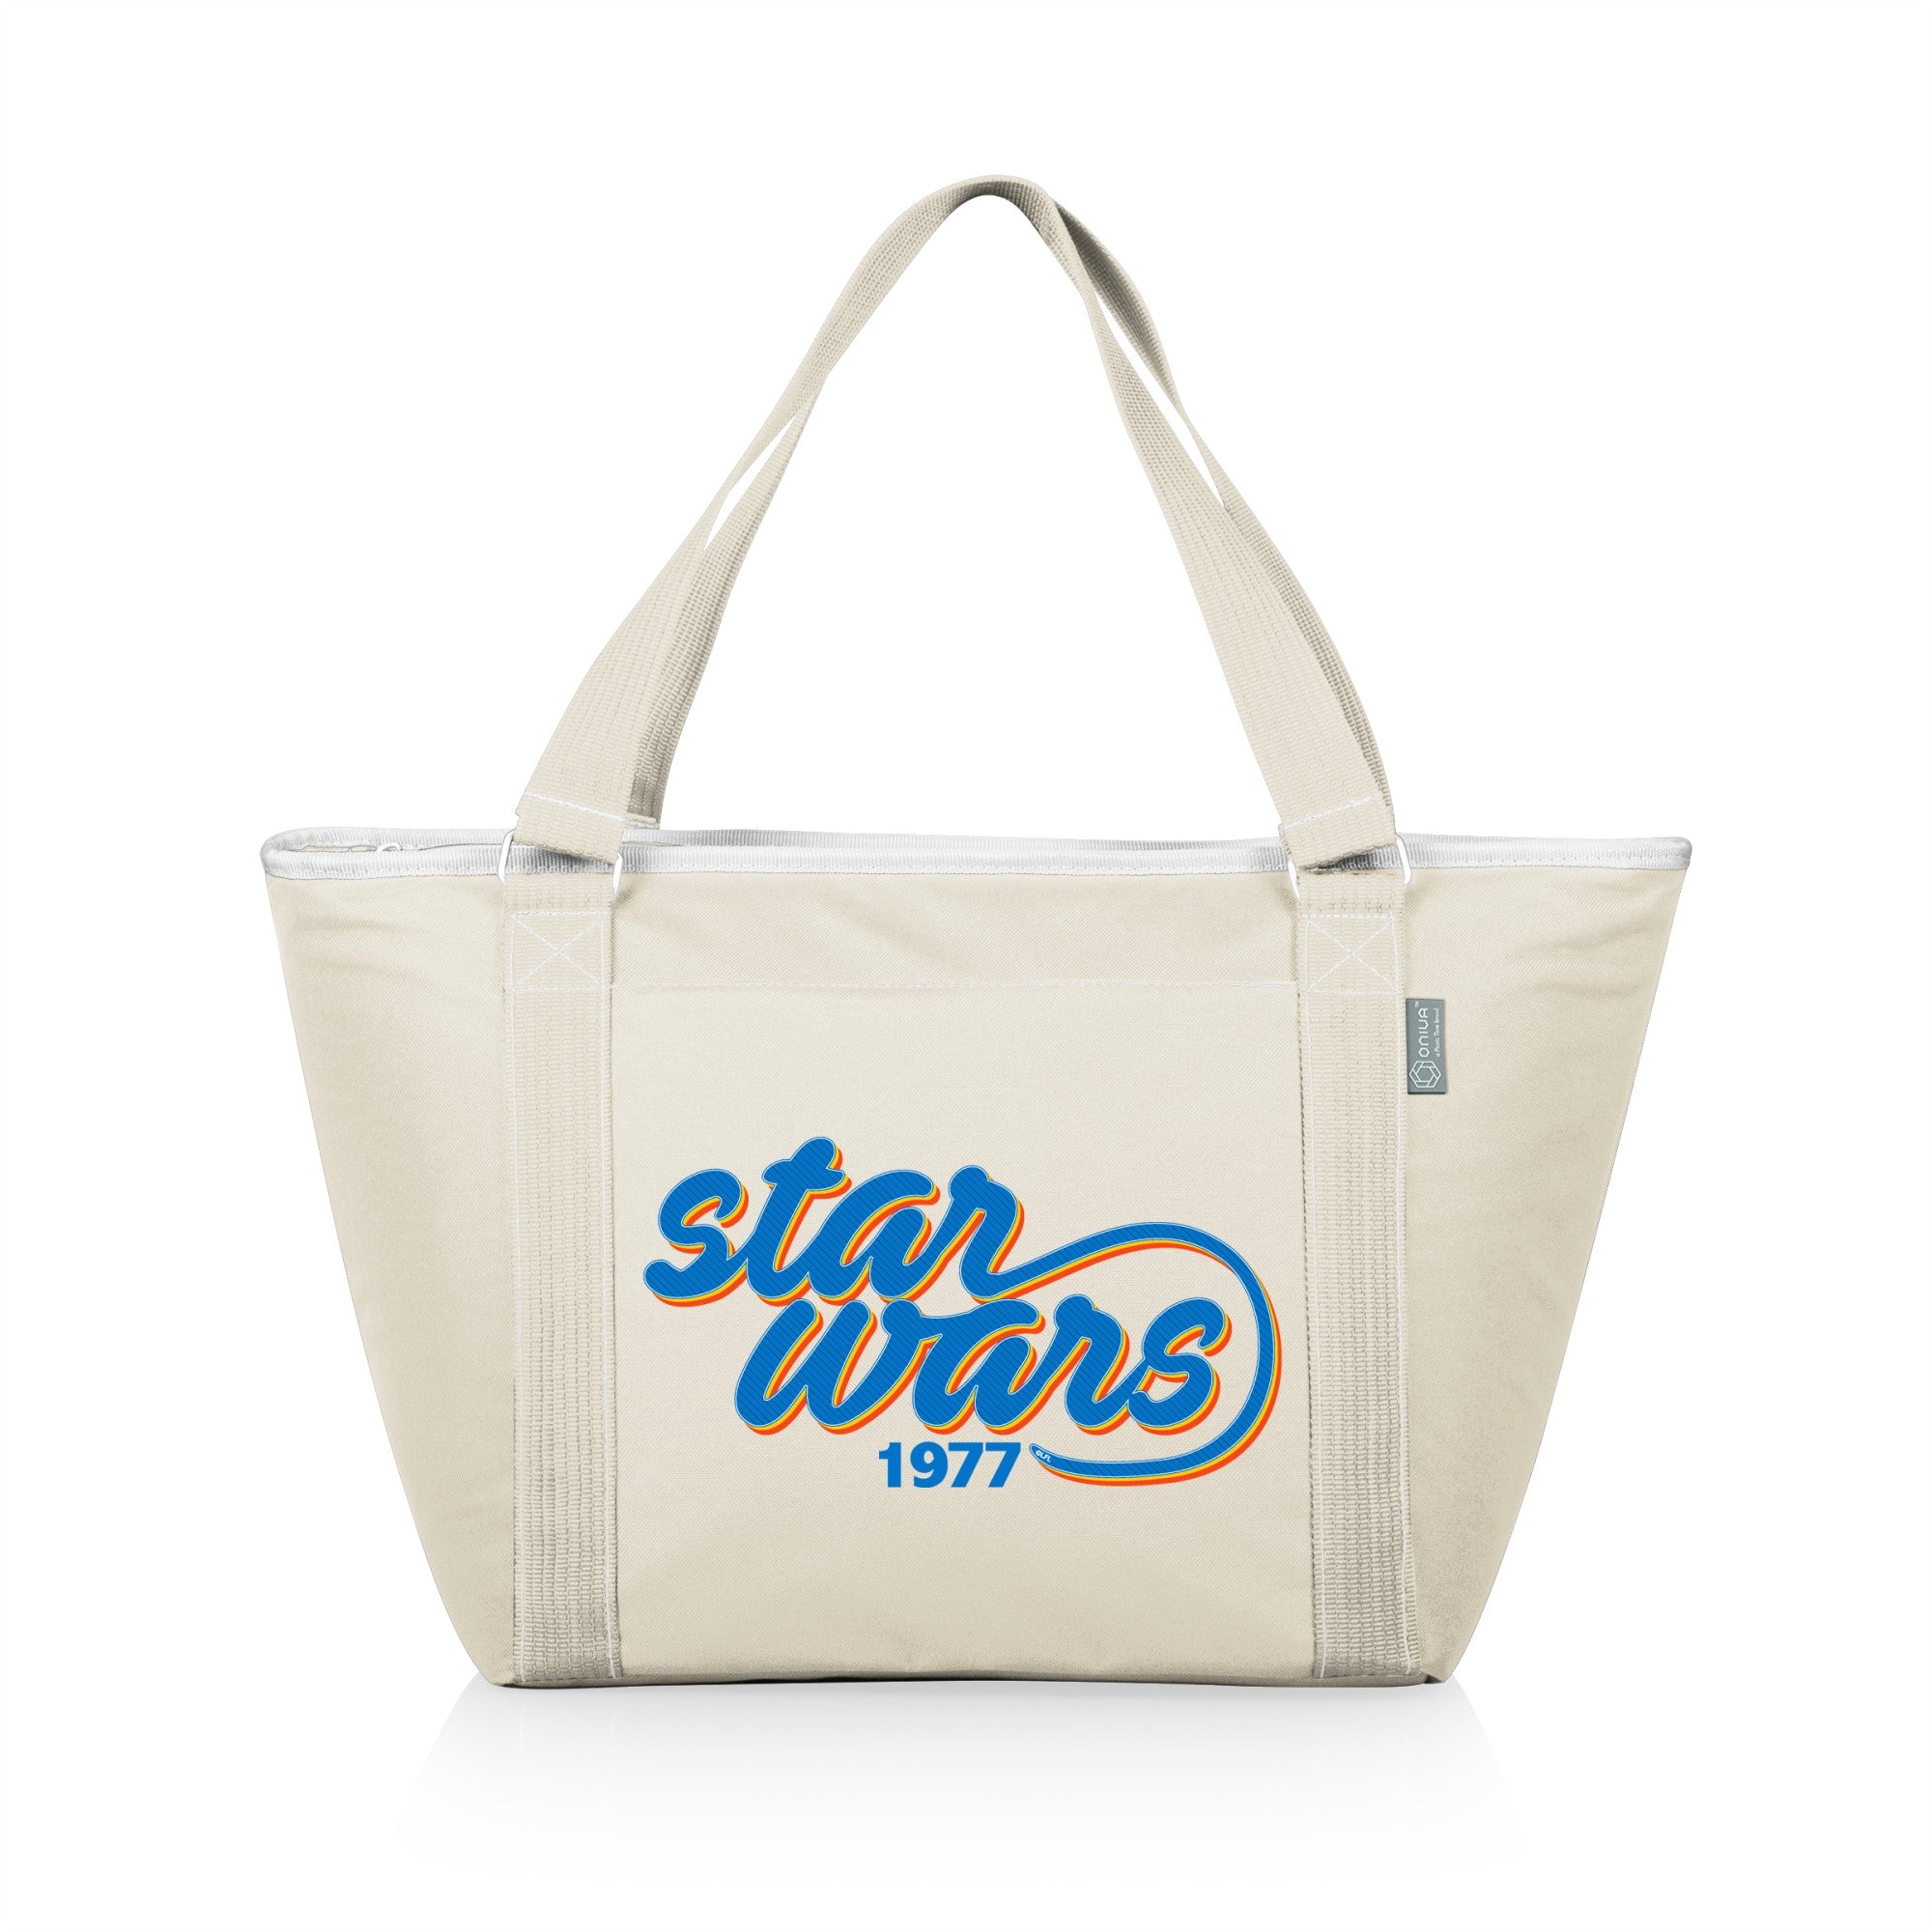 Star Wars 1977 - Topanga Cooler Tote Bag